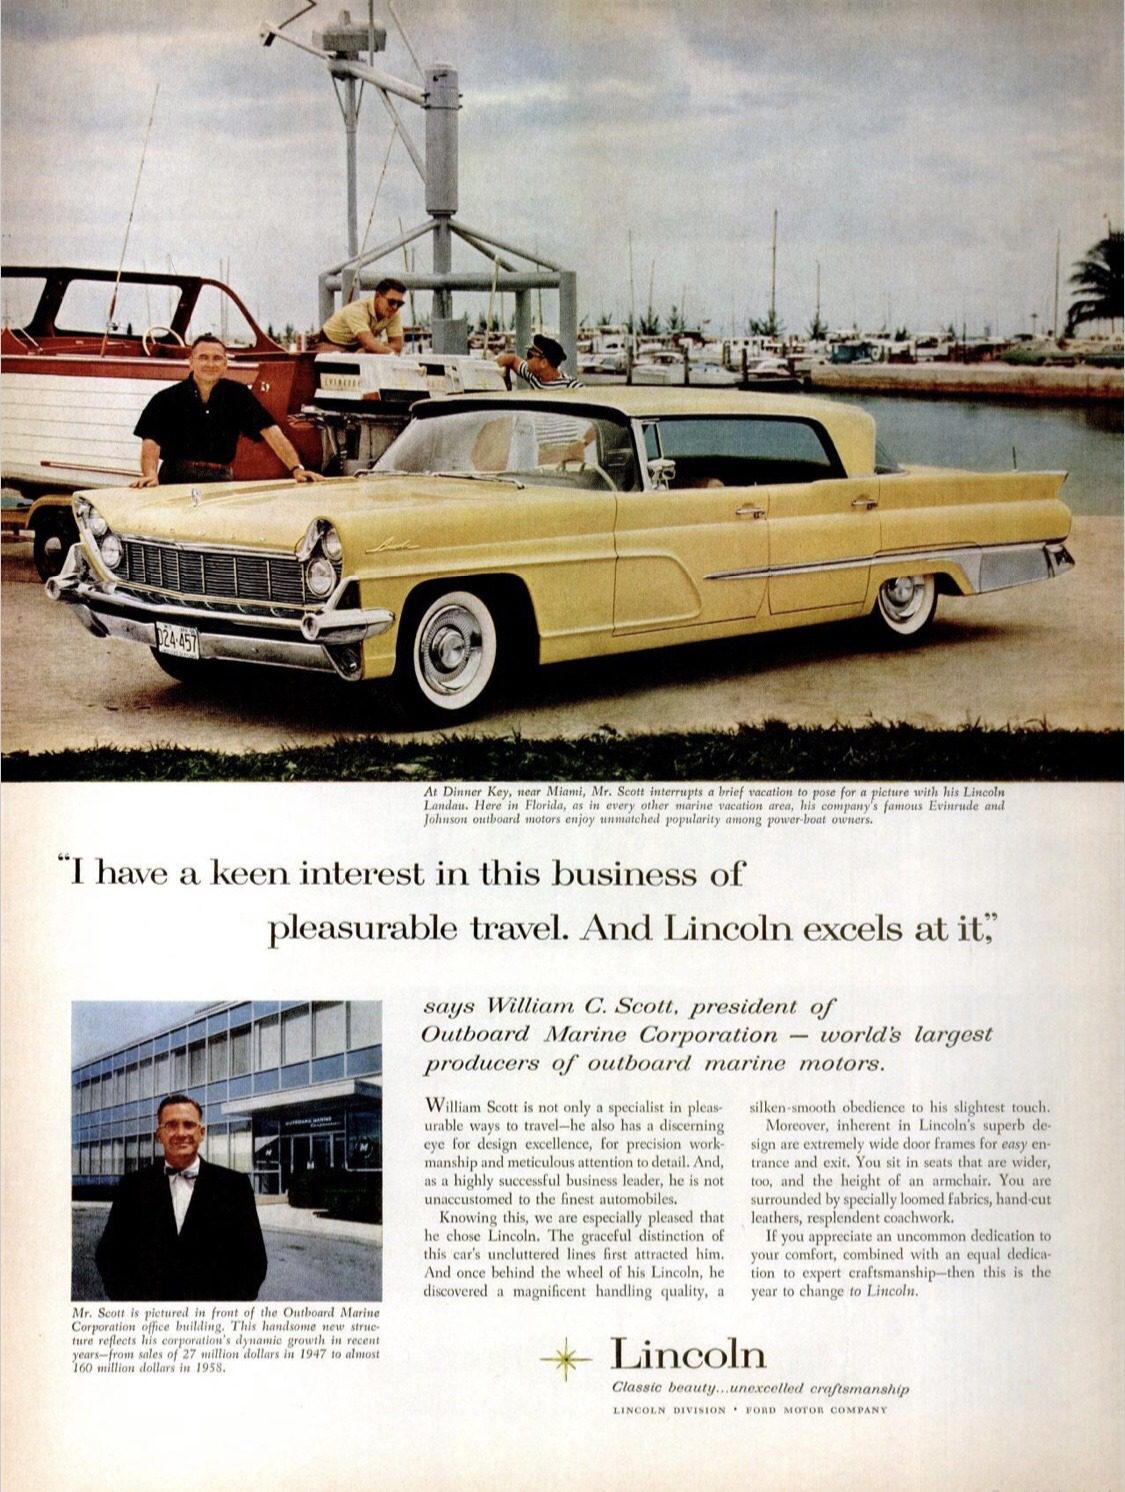 1959 Lincoln automobile advertisement